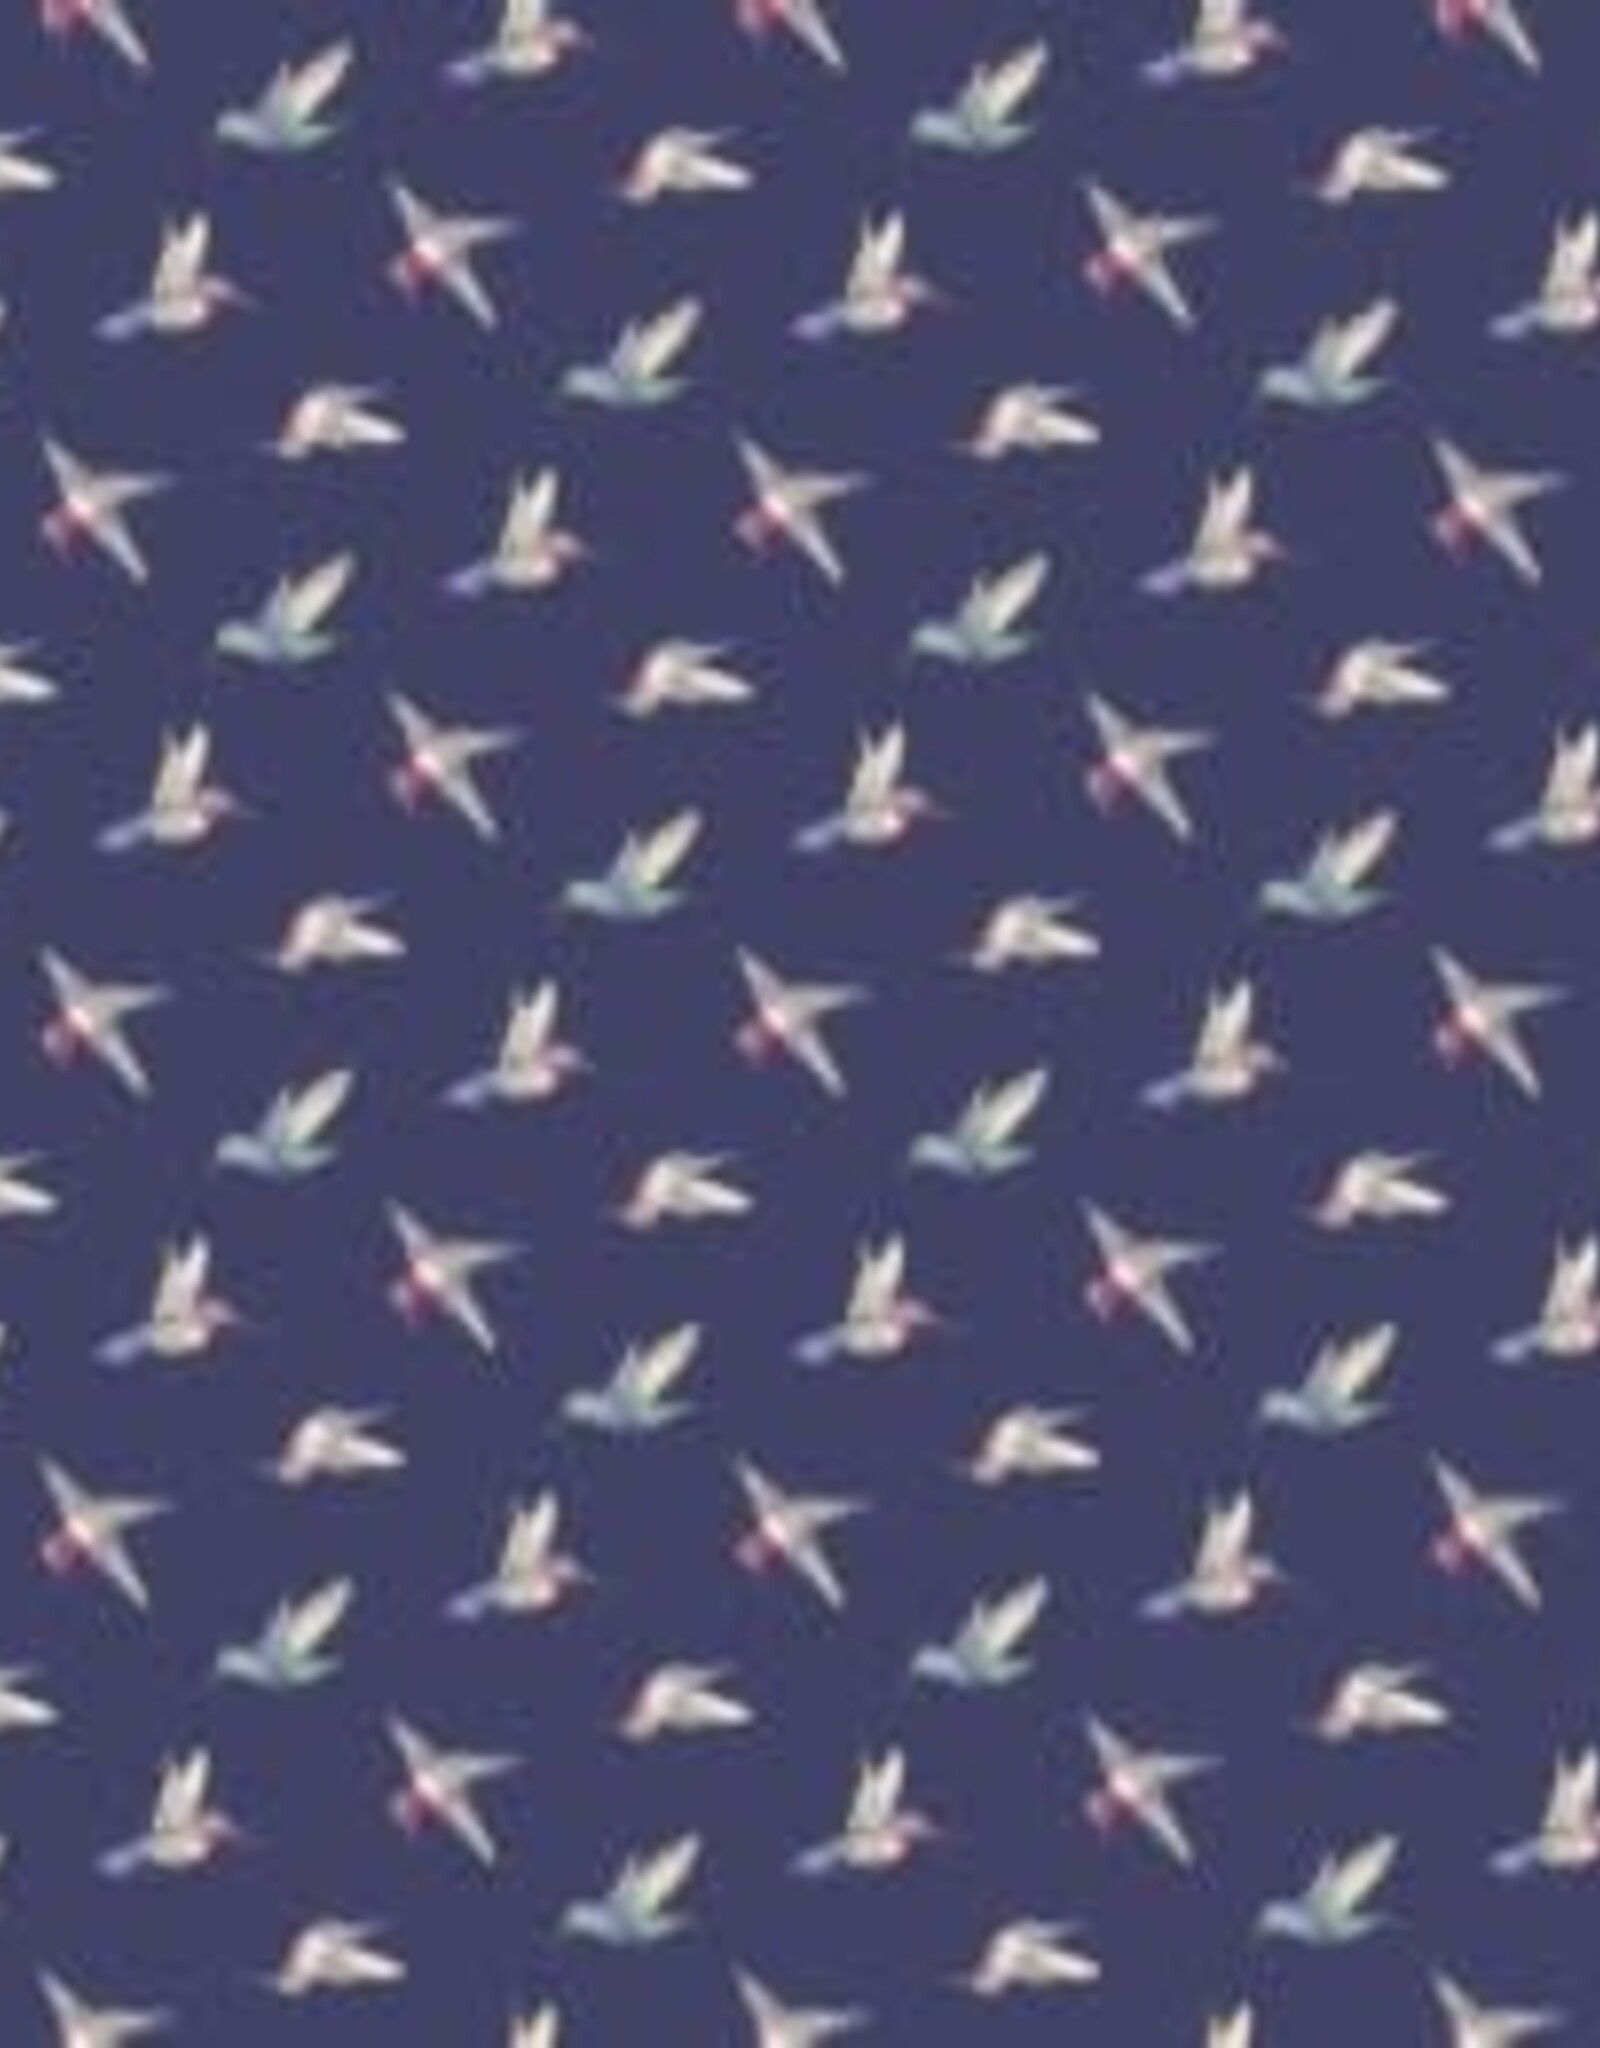 Avalon Fabrics Blue Hummingbirds  A697B